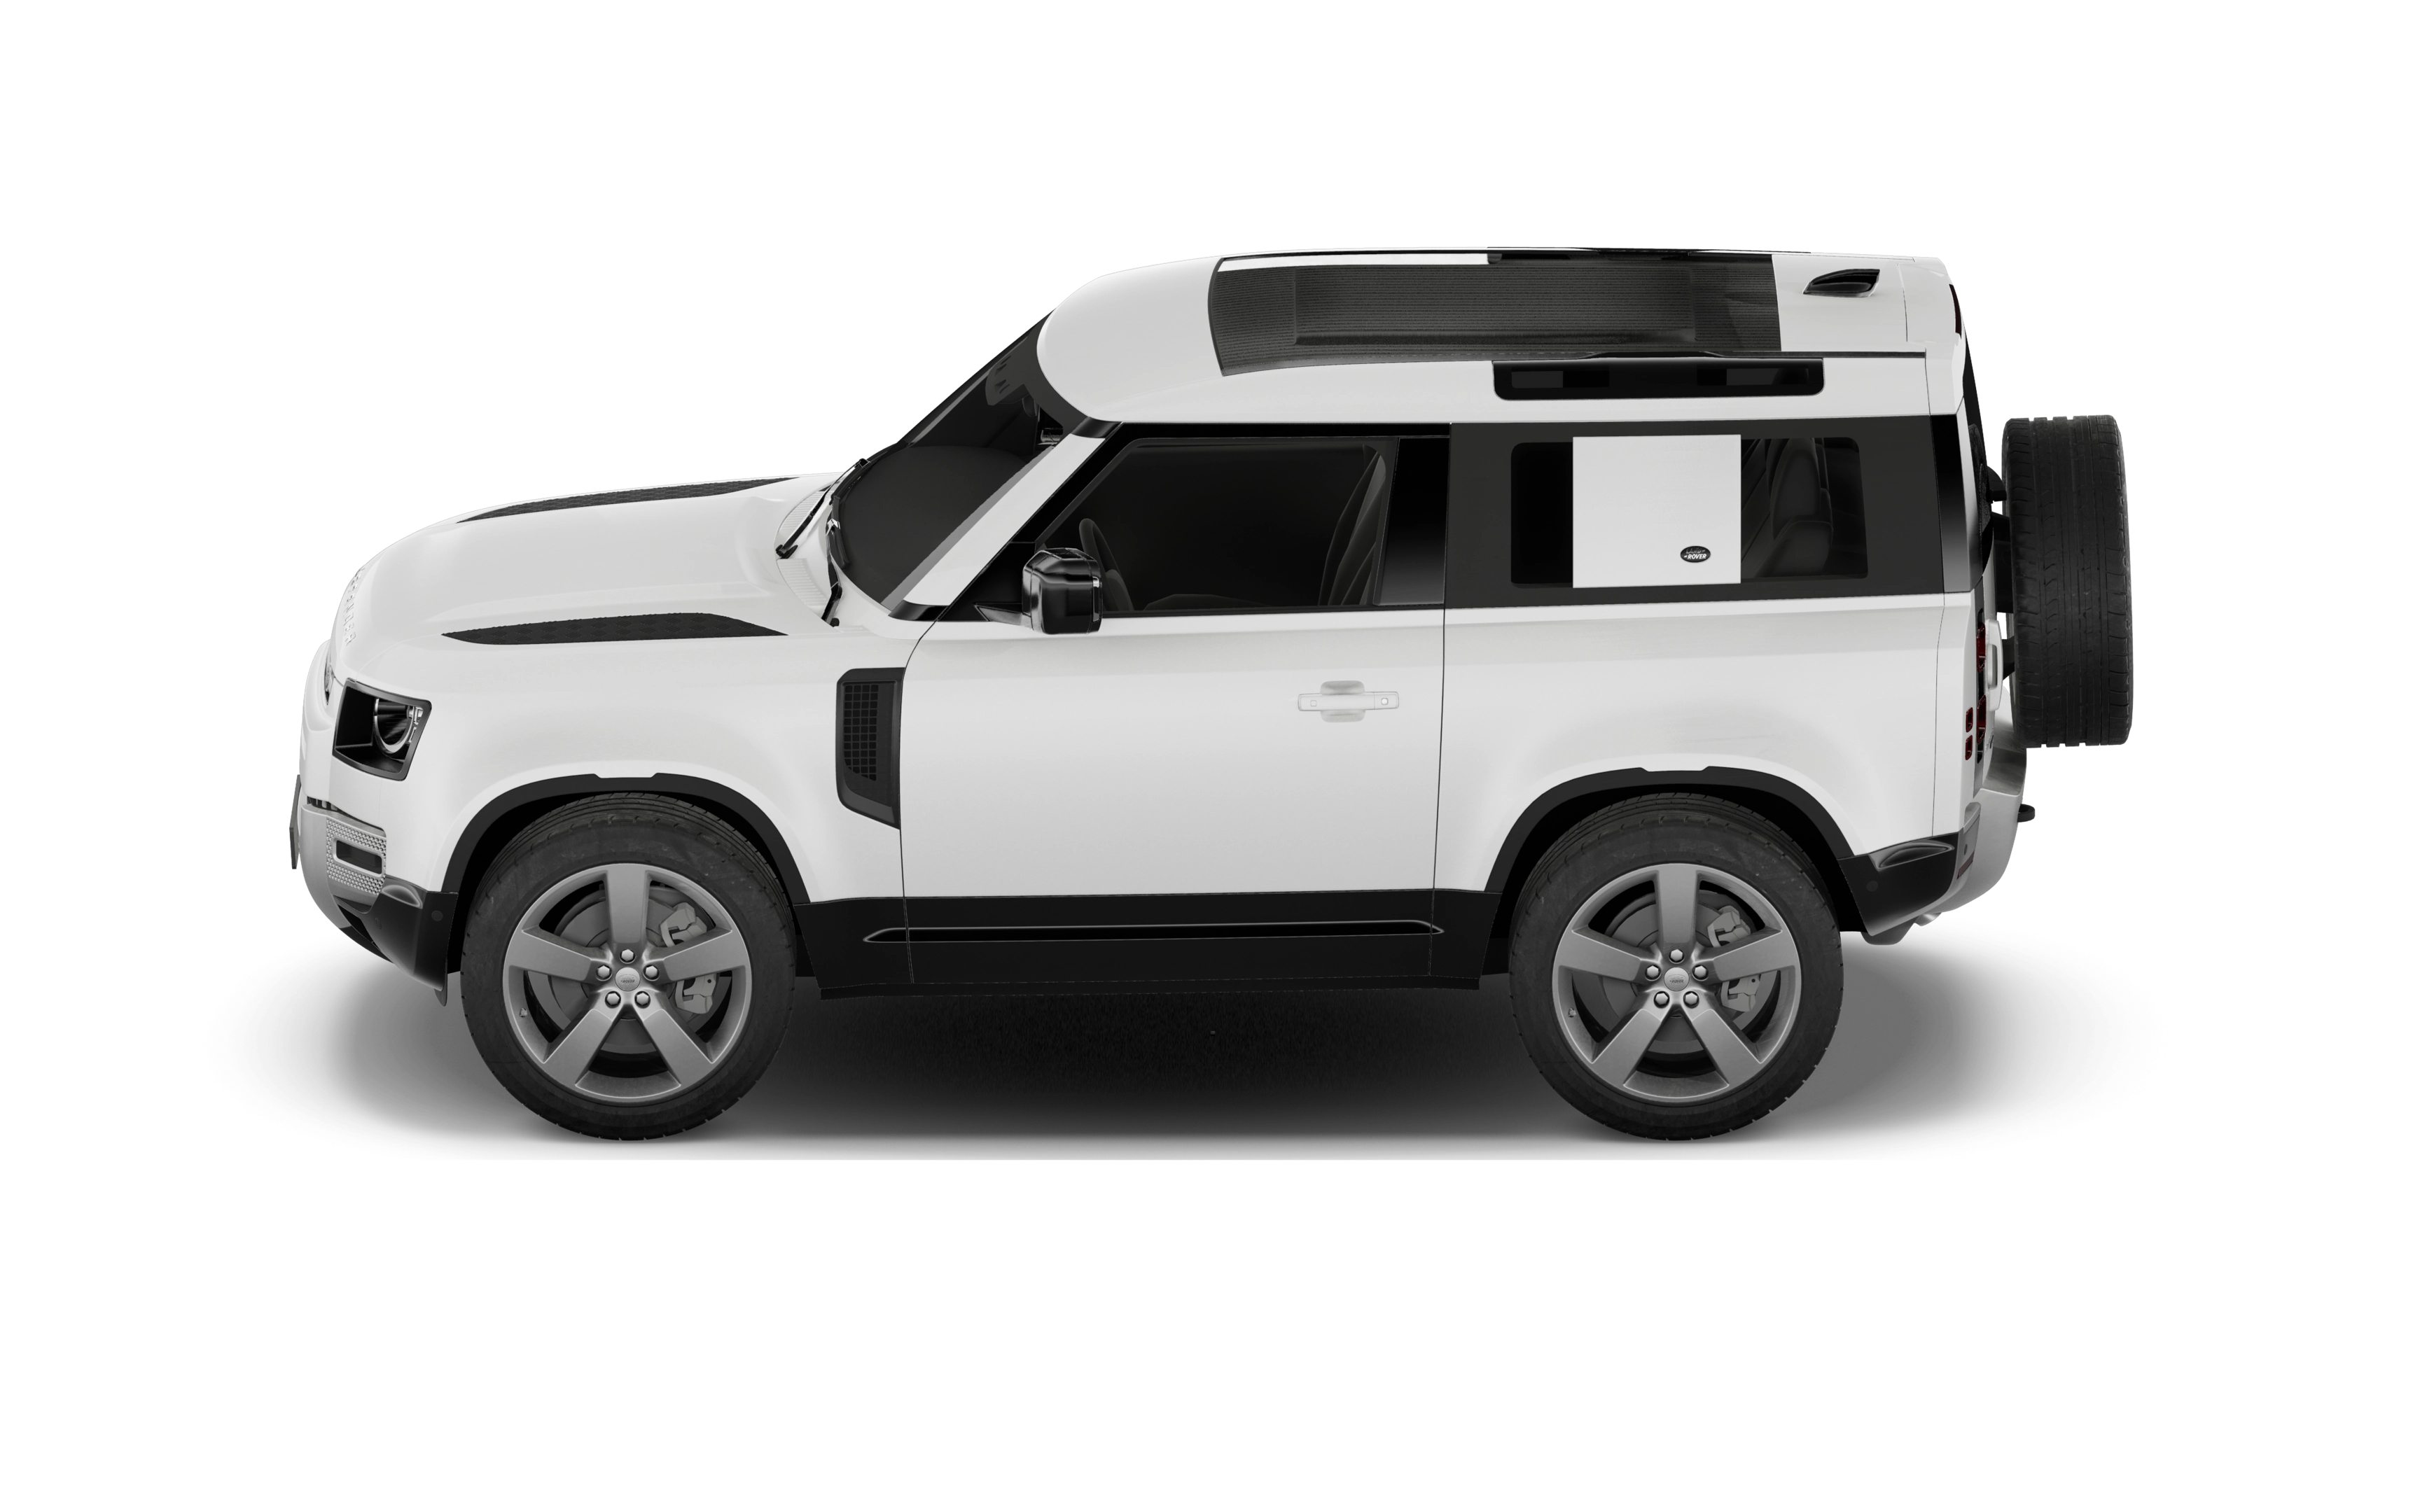 Land rover defender estate 3.0 d300 se 110 5 doors auto [6 seat]